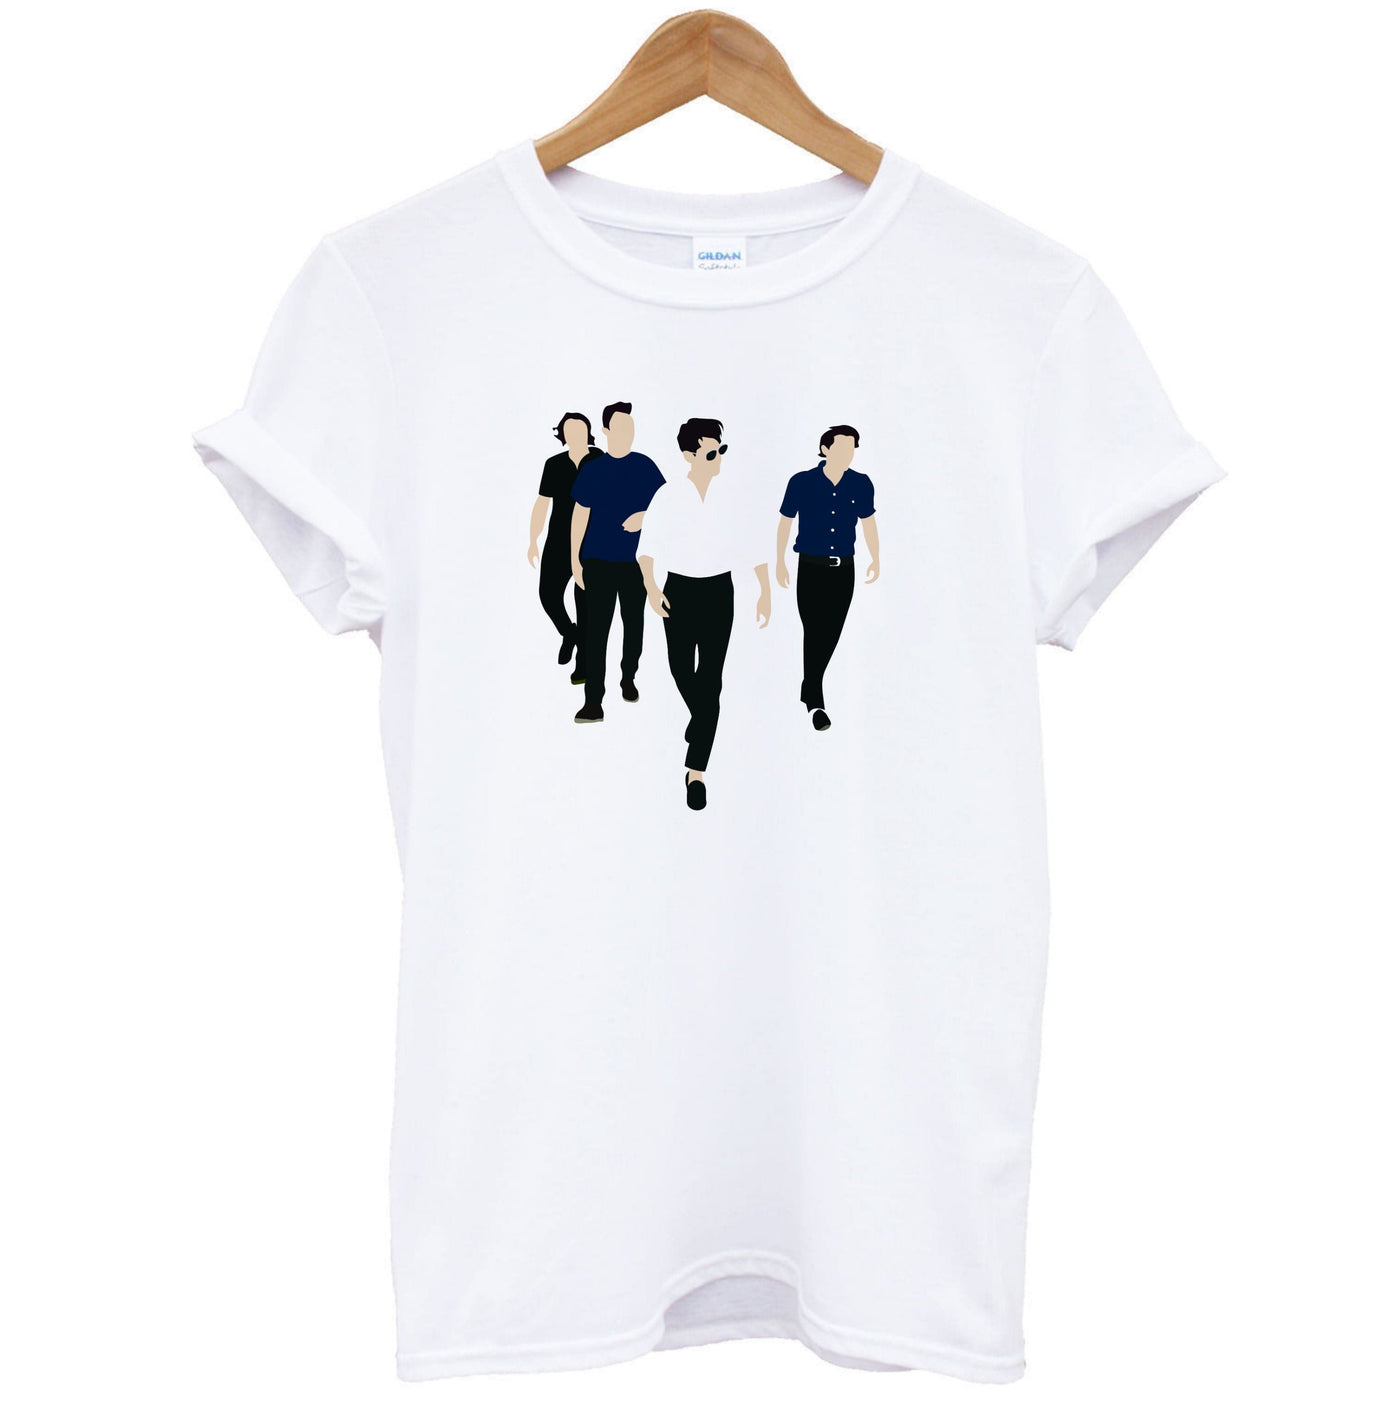 Walking - Arctic Monkeys T-Shirt